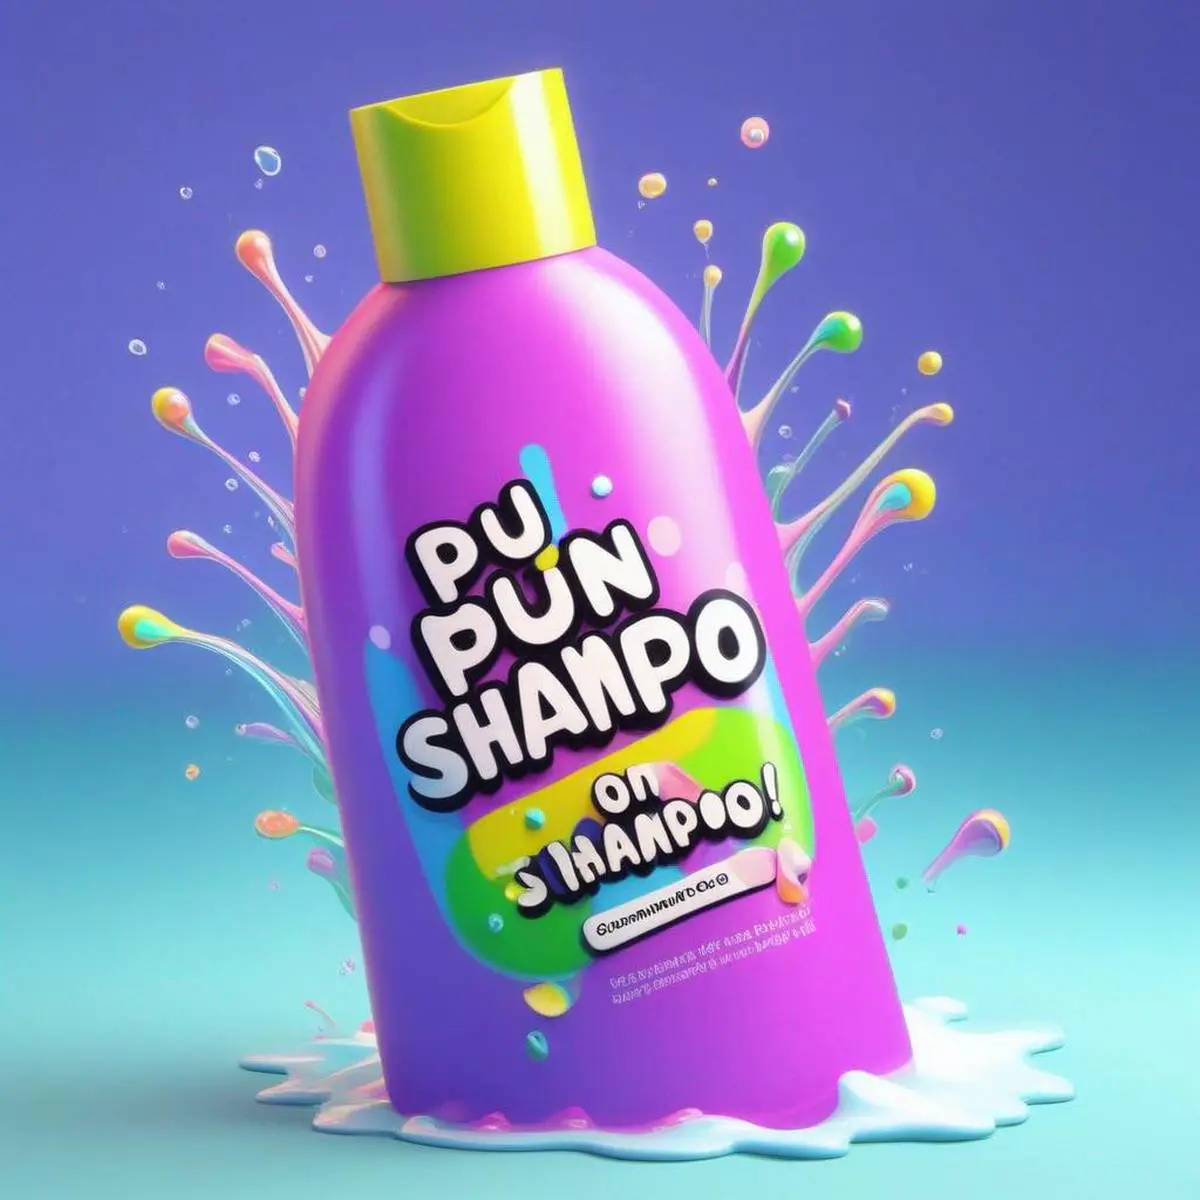 Shampoo puns